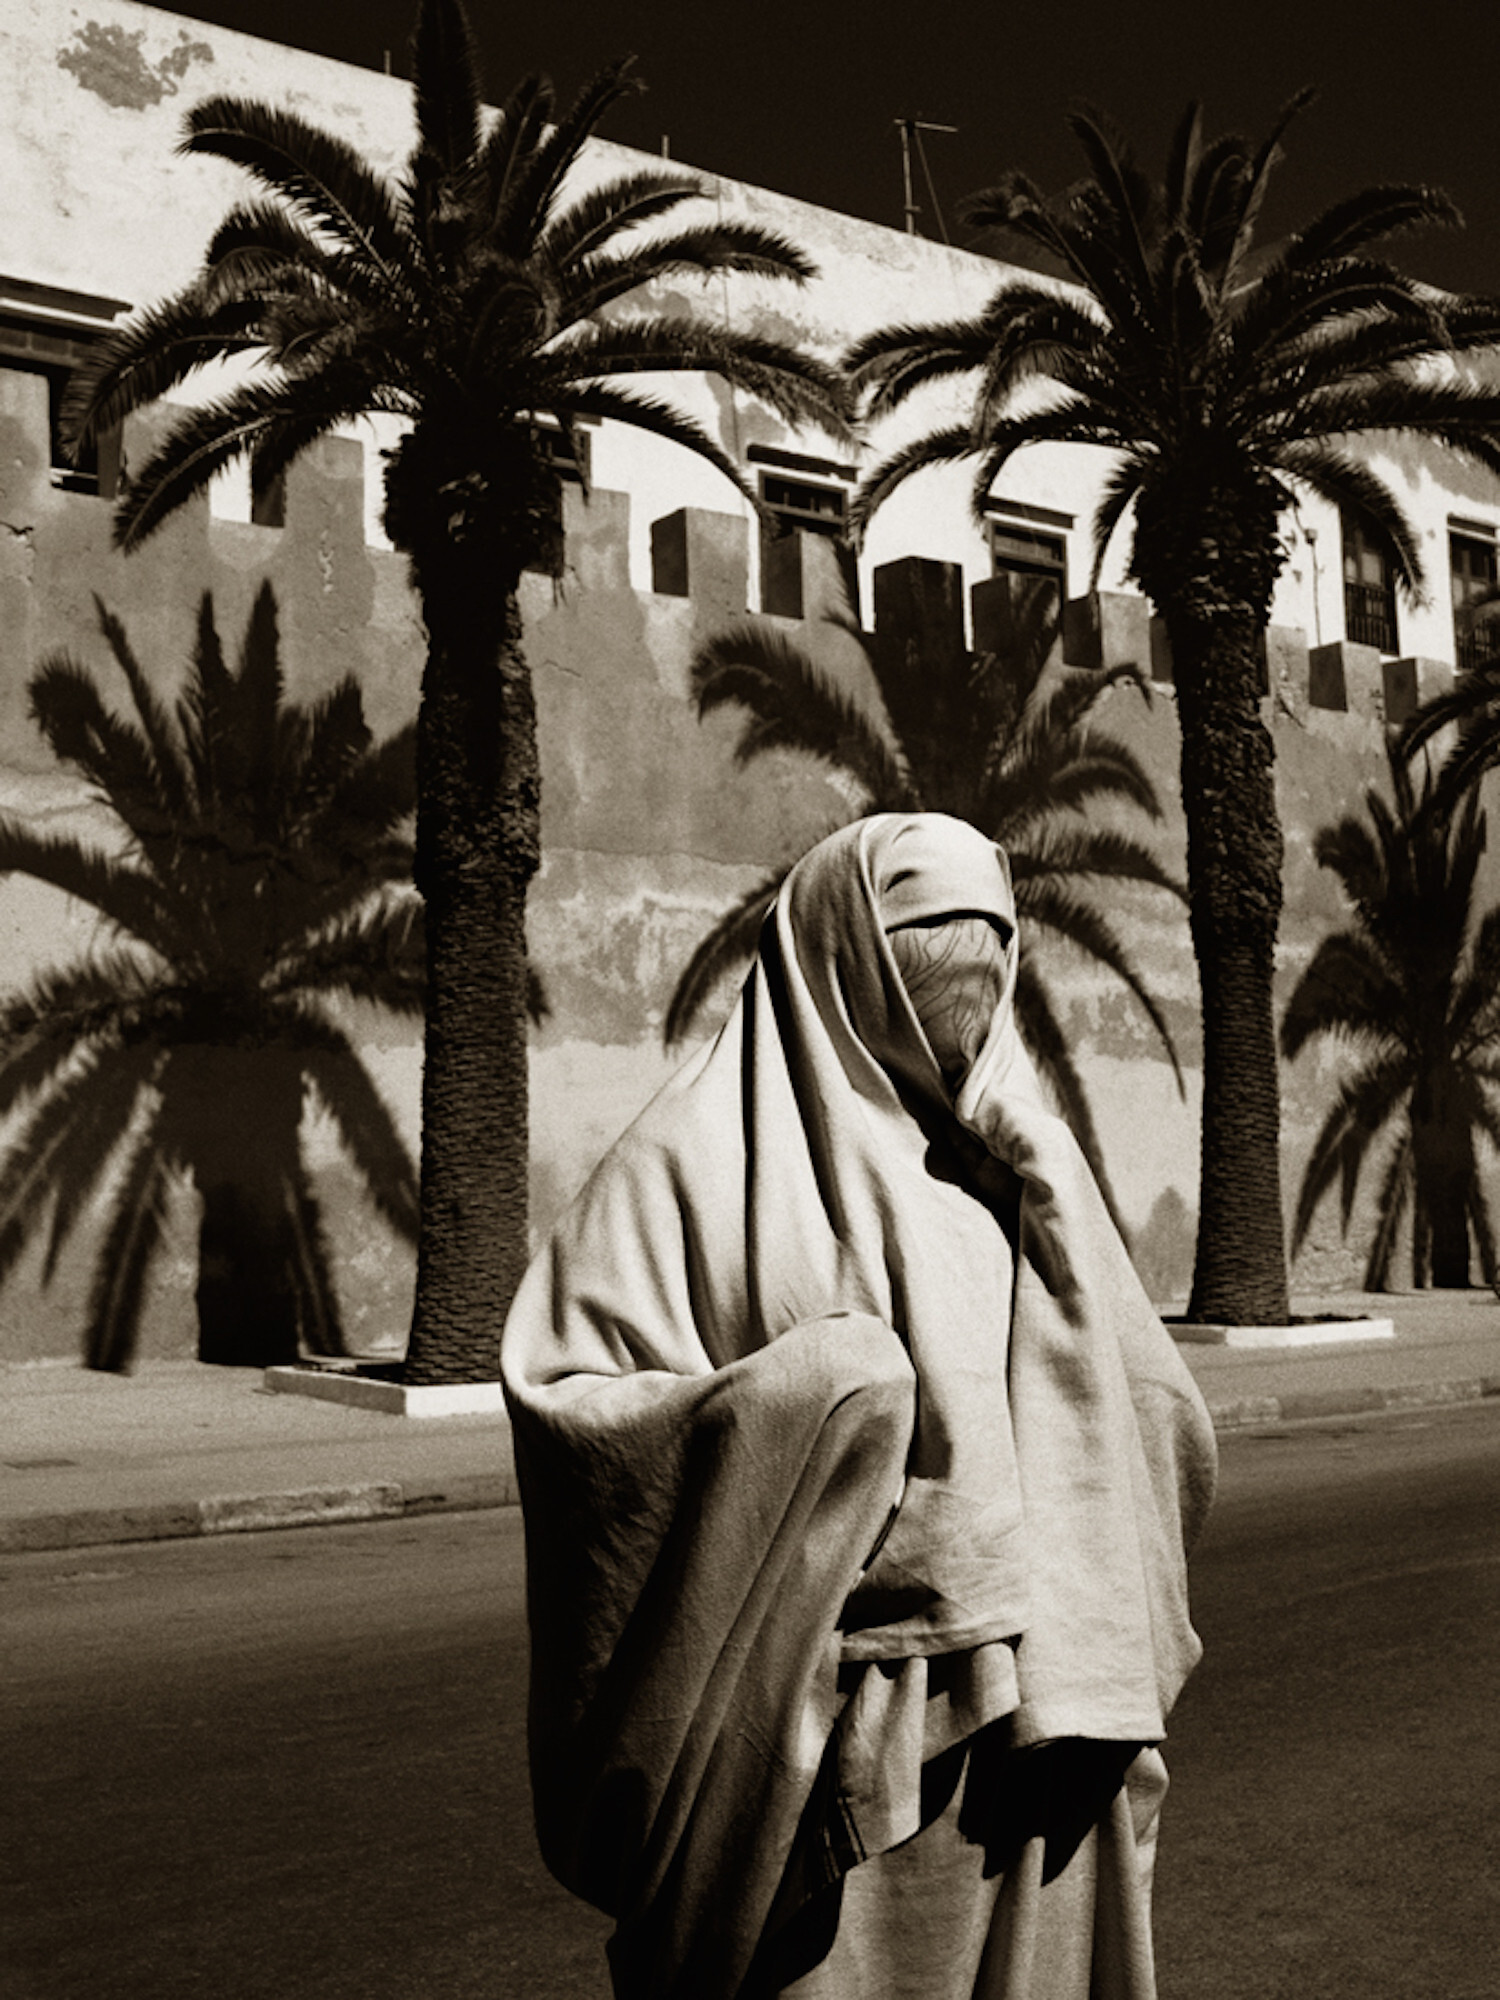 Халима БенТадж, Эс-Сувейра, Марокко, 1998 год. Фотограф Альберт Уотсон